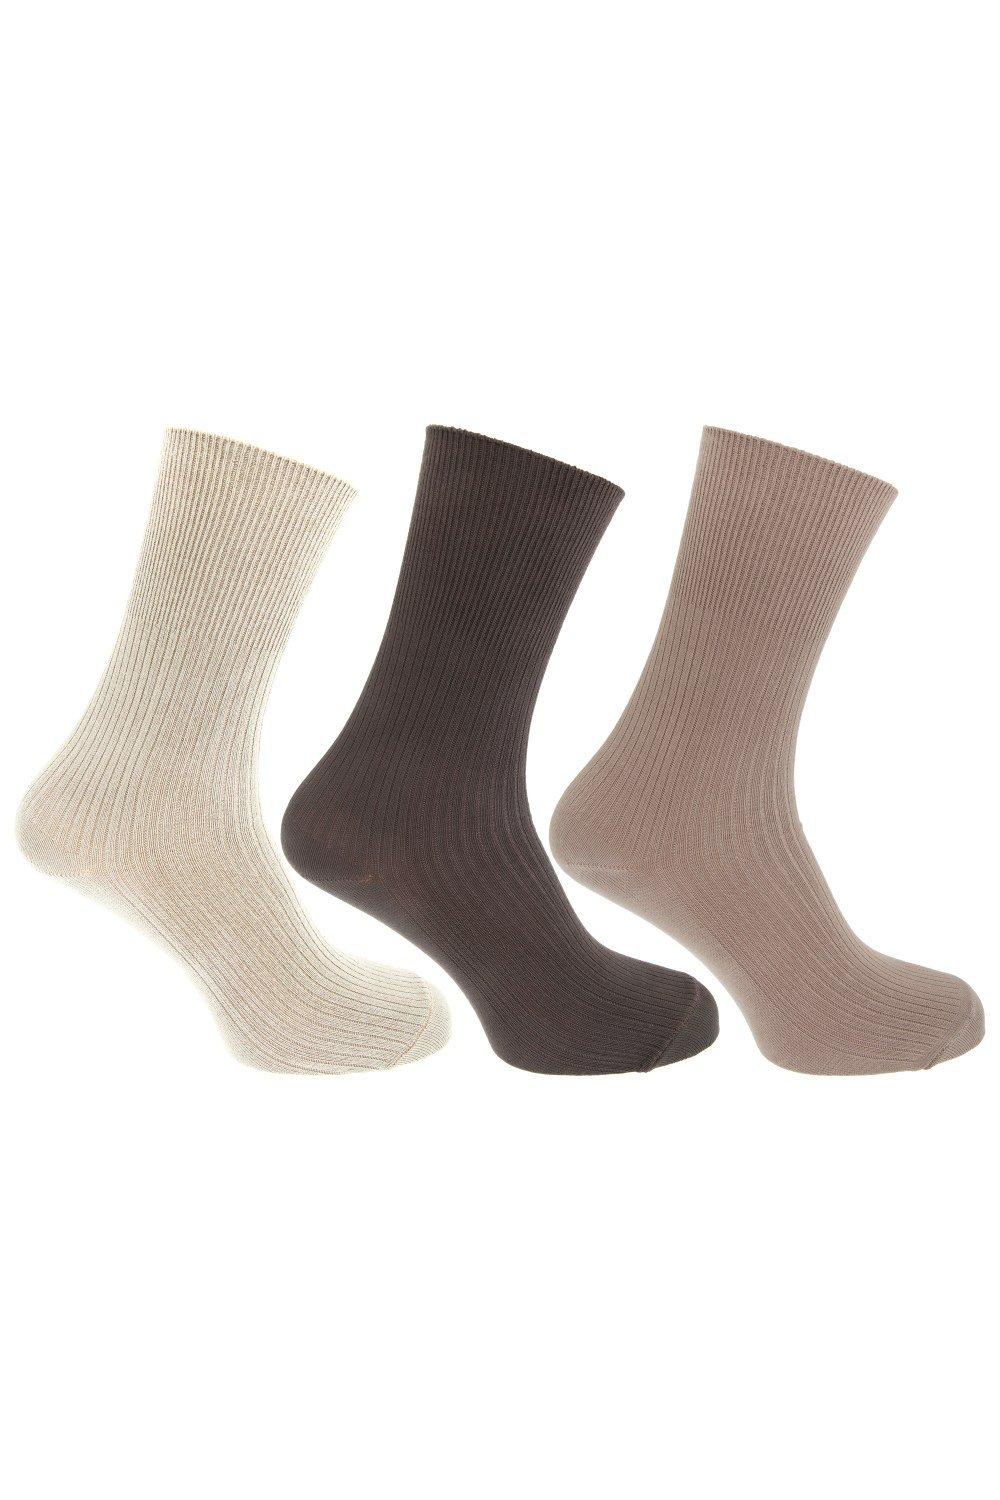 Casual Non Elastic Bamboo Viscose Socks (Pack Of 3)